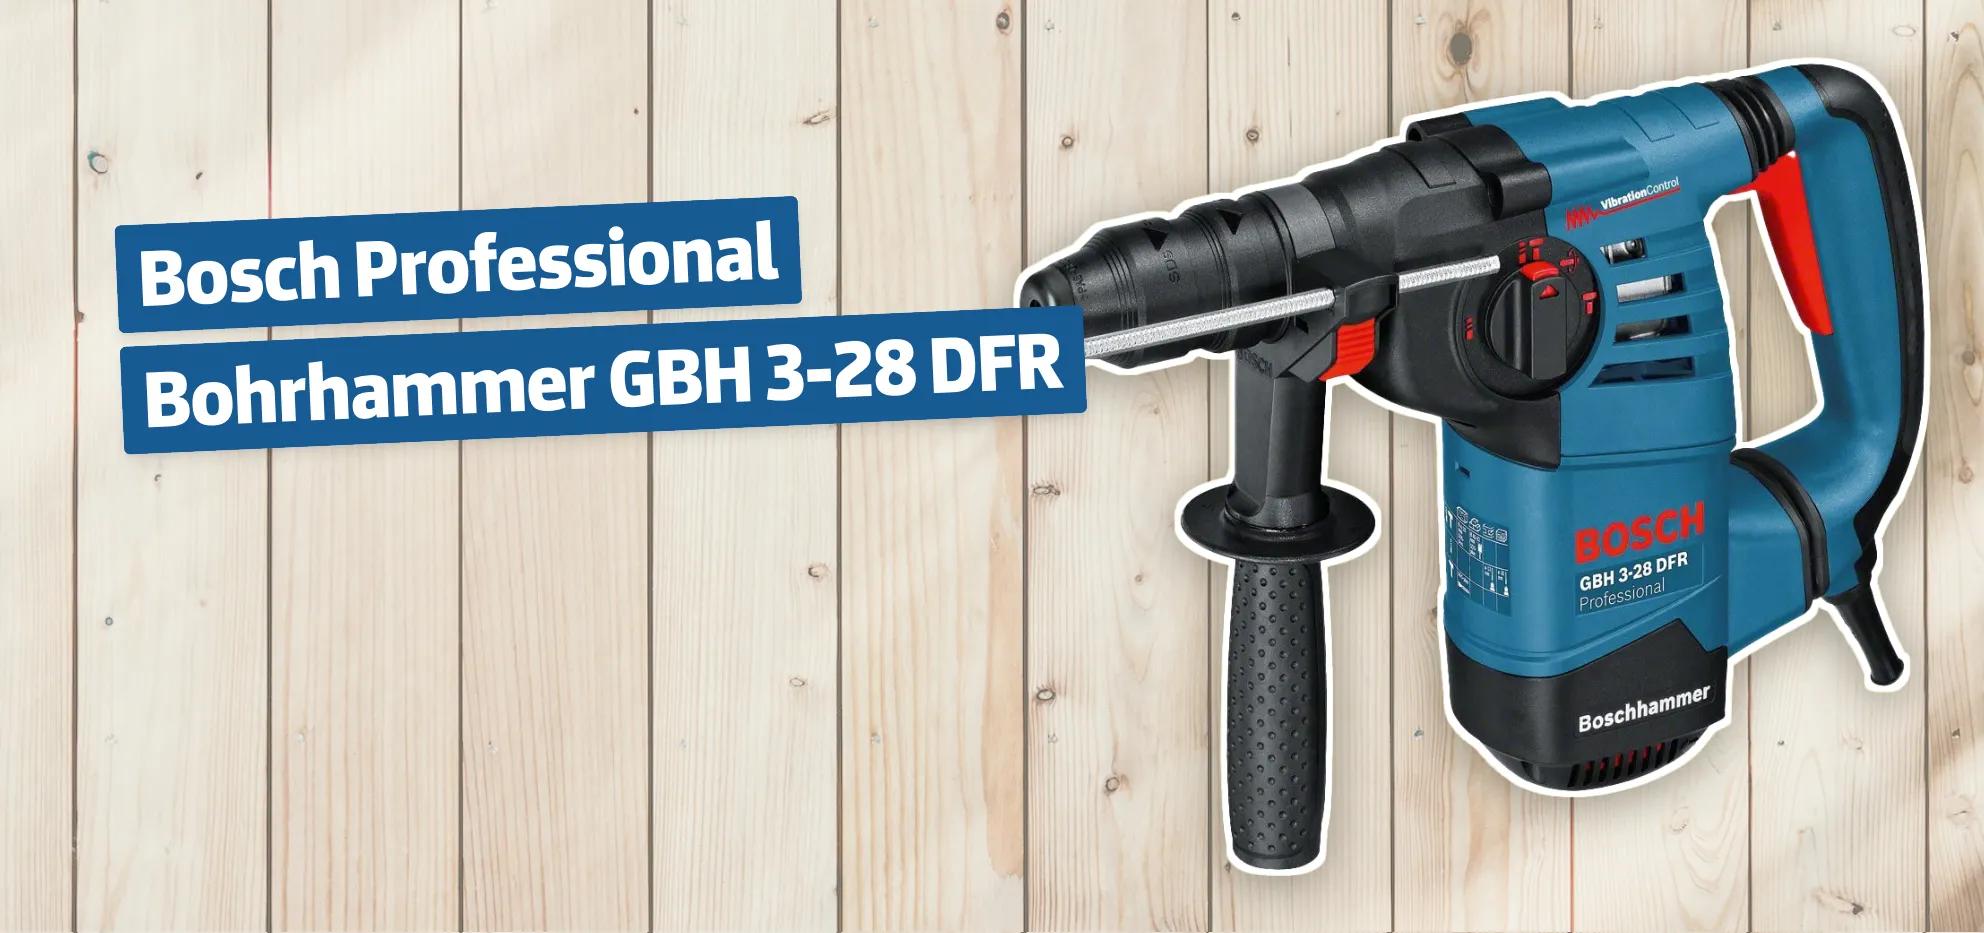 Bosch Professional Bohrhammer GBH 3-28 DFR